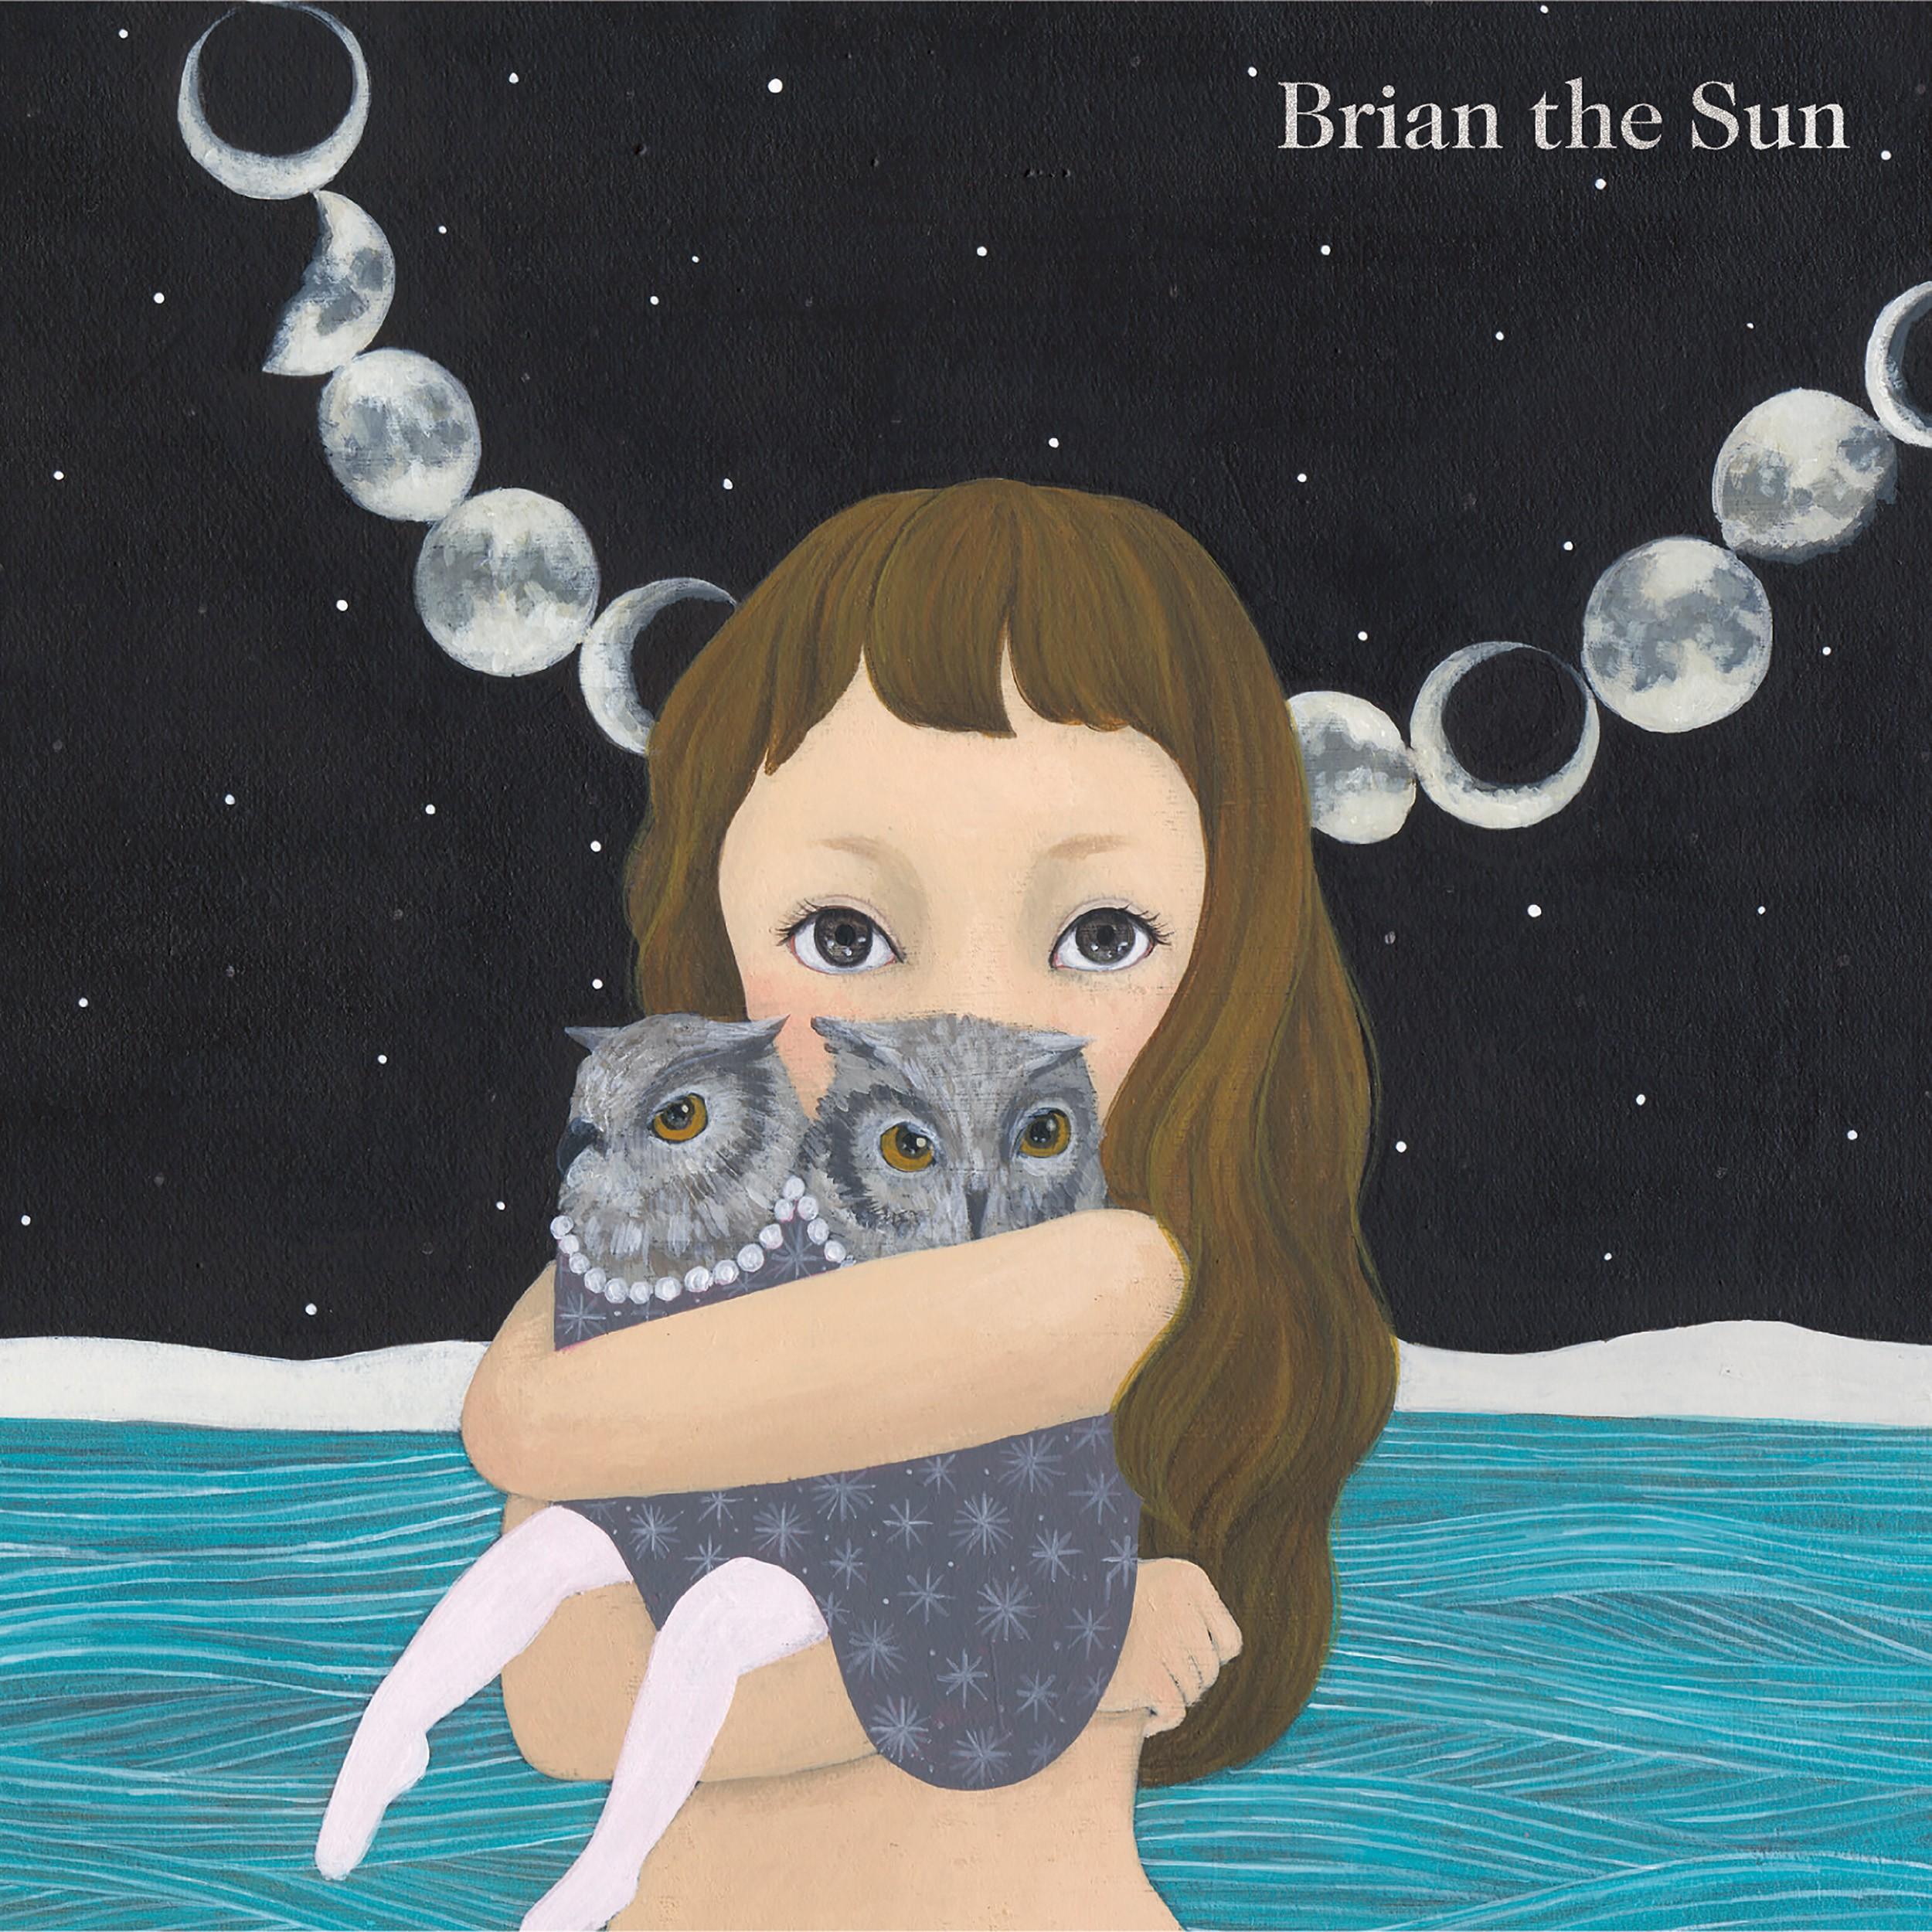 Brian the Sun / Brian the Sun